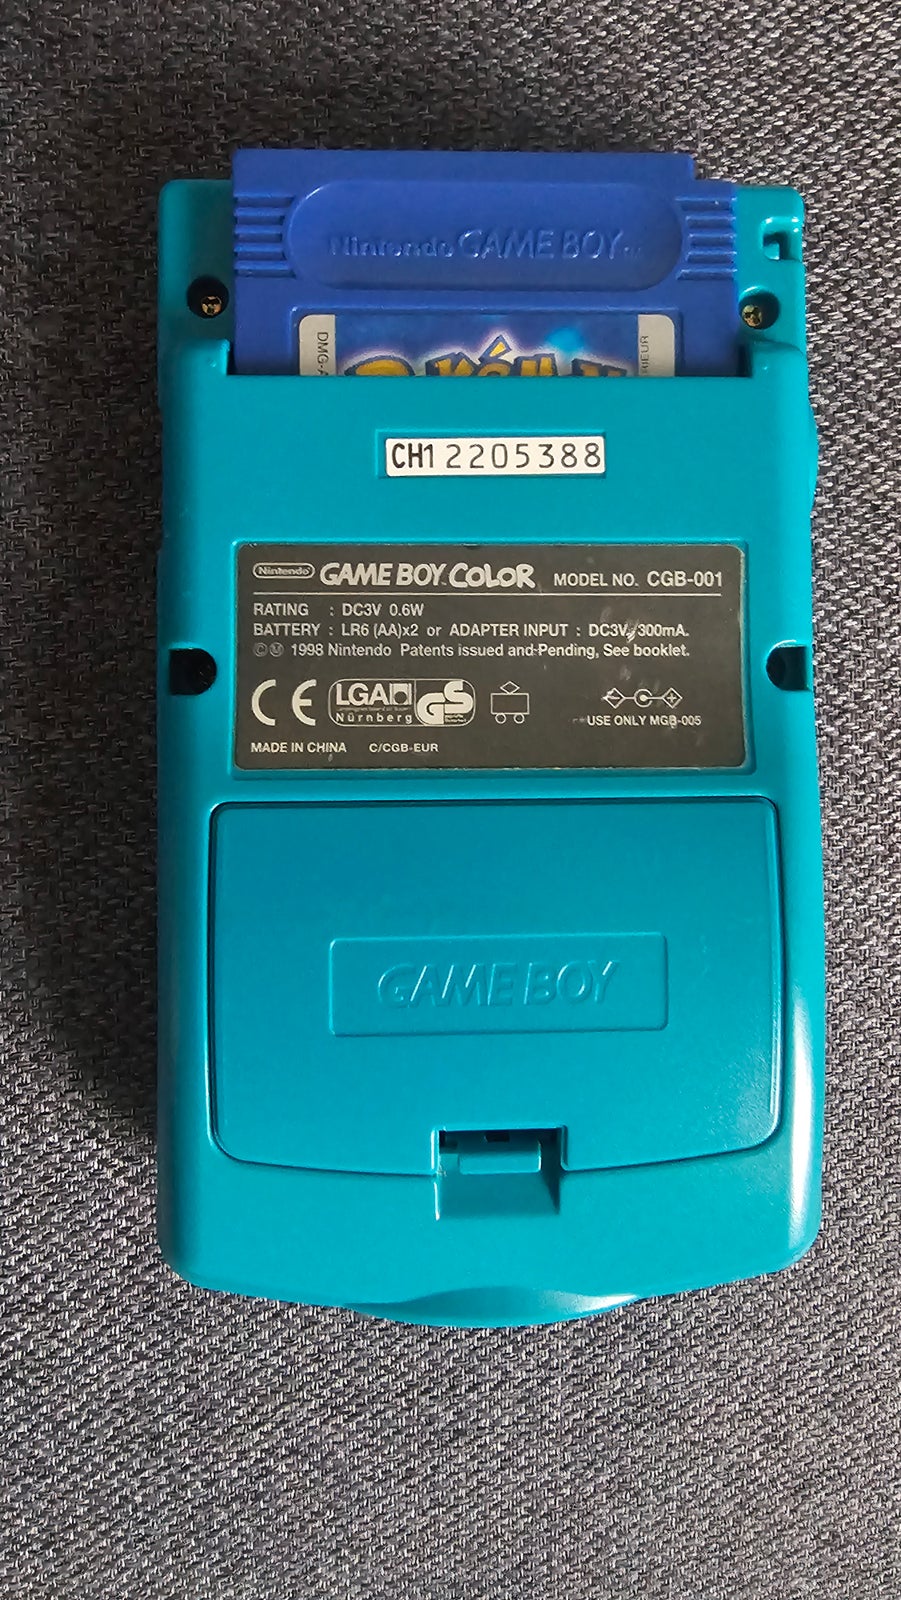 Nintendo Game Boy Color, Gameboy Color Turkis, Perfekt